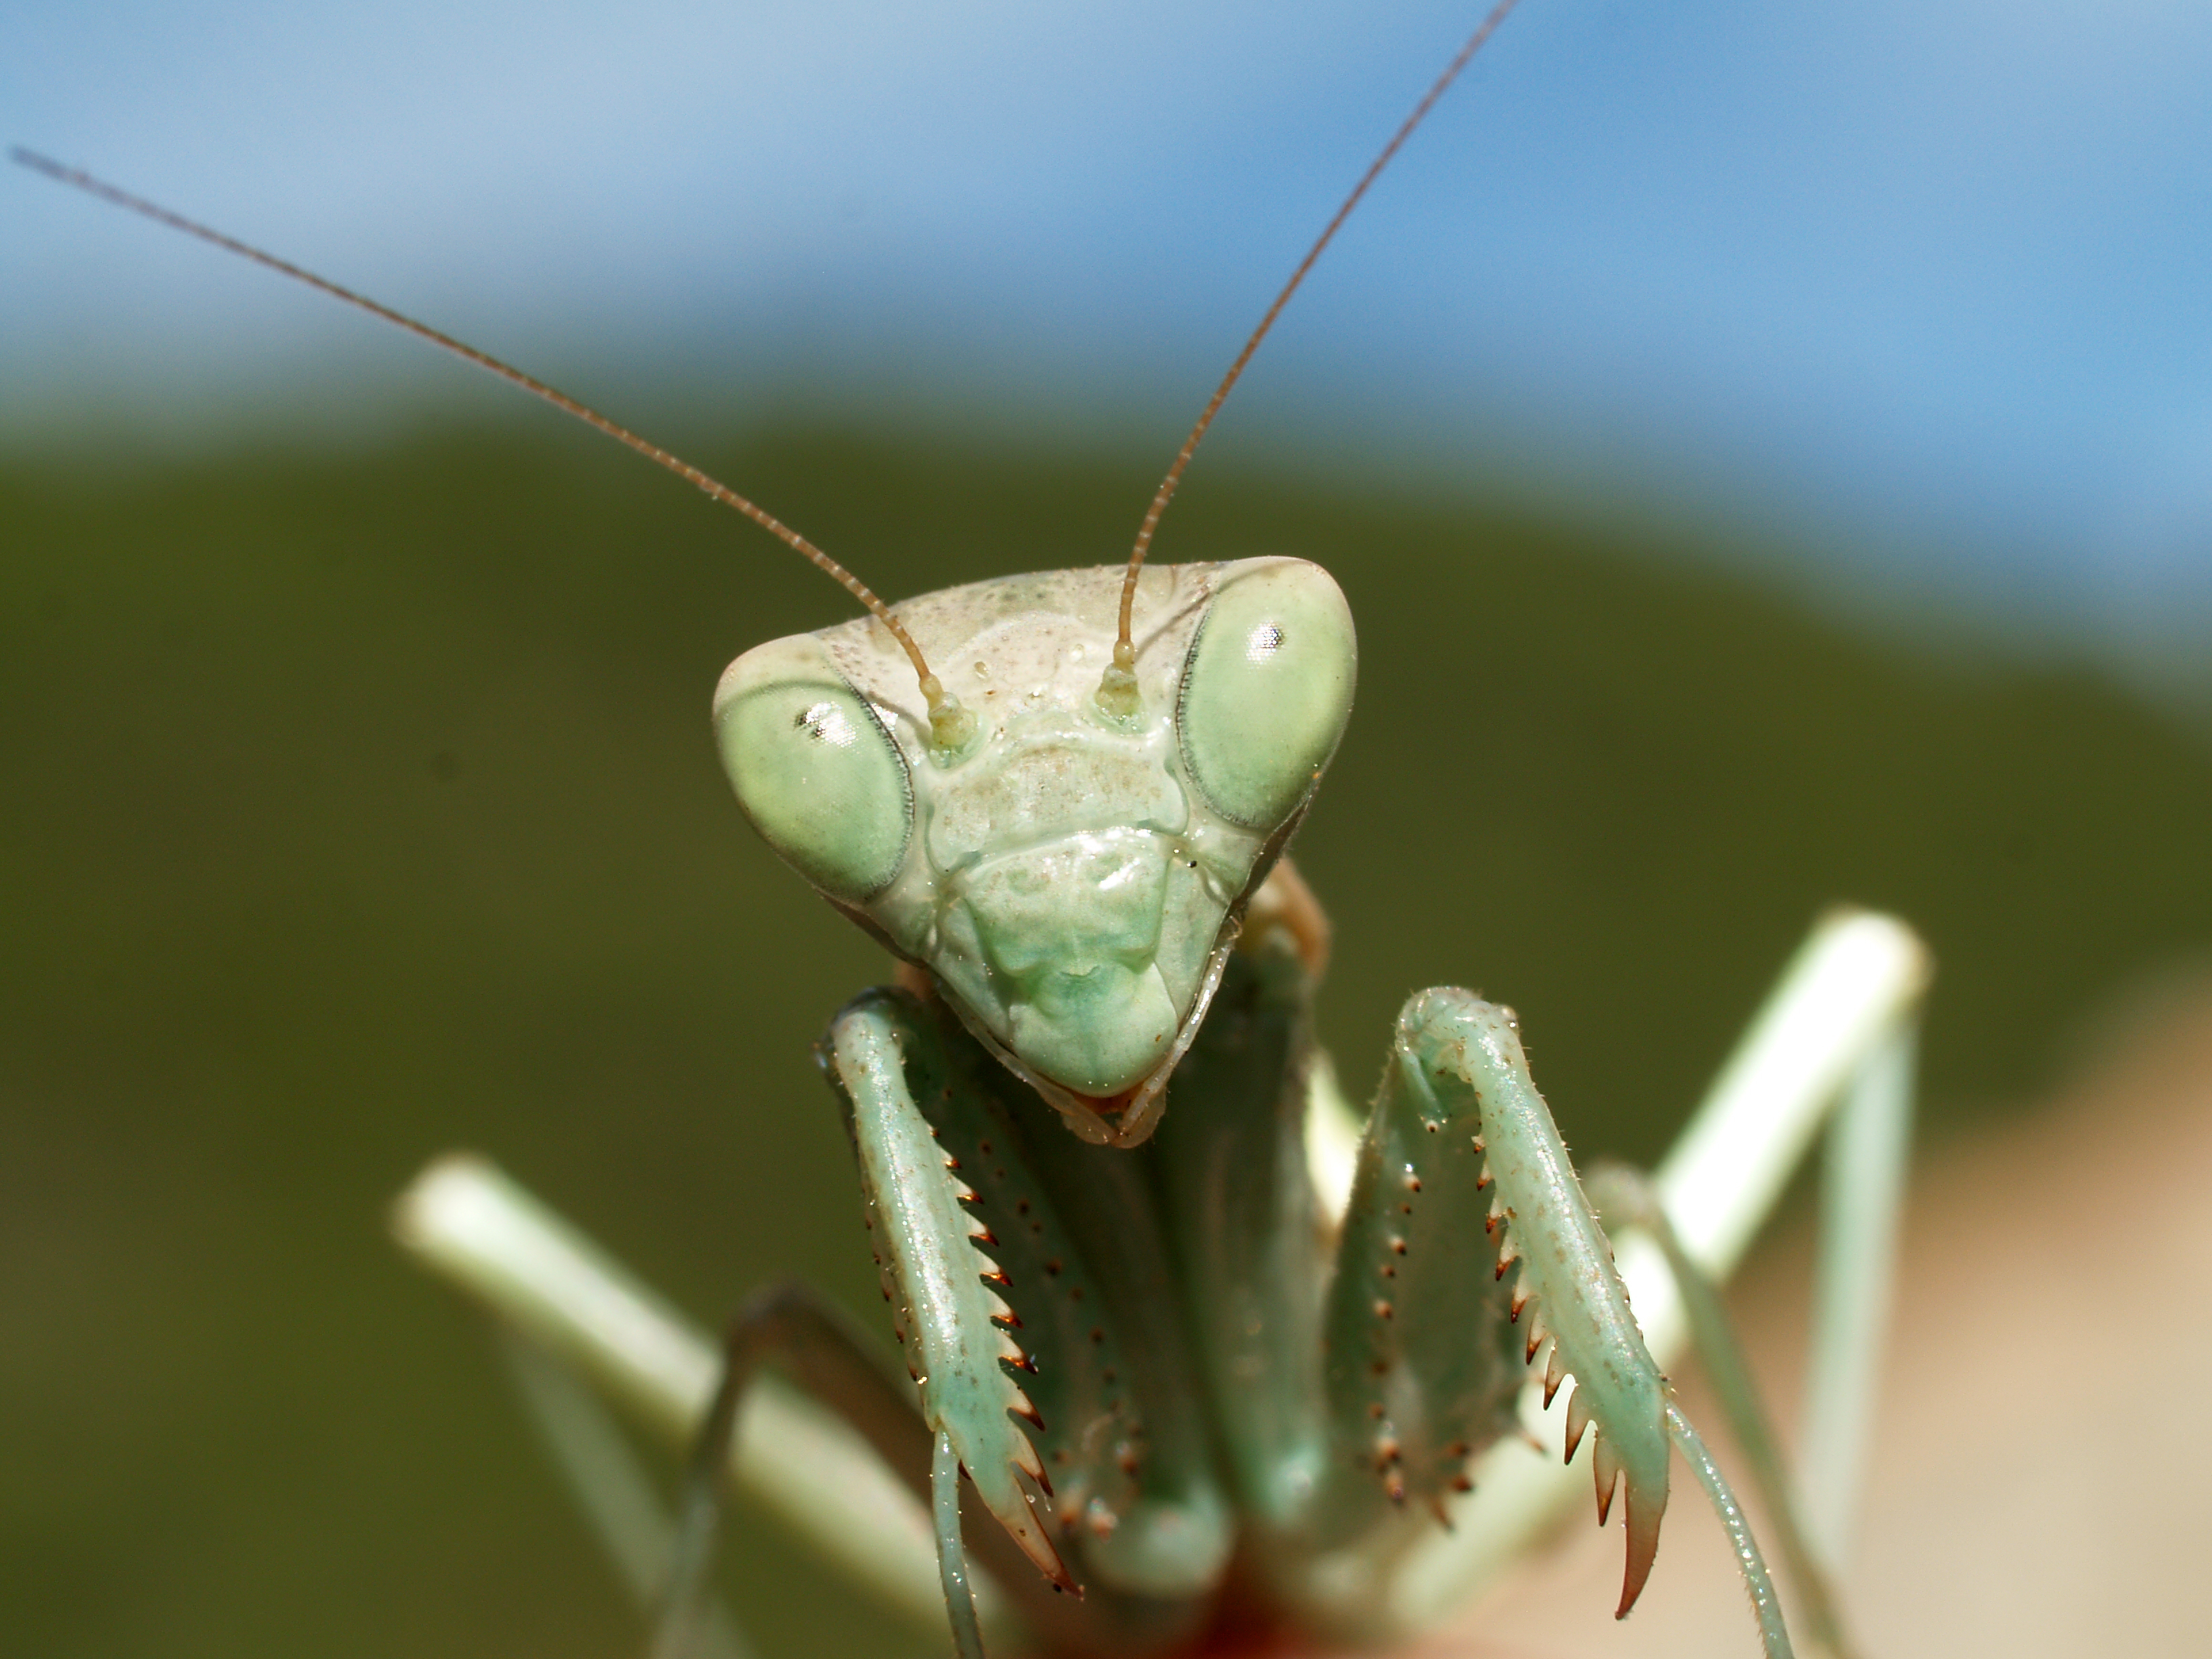 Descarga gratuita de fondo de pantalla para móvil de Mantis Religiosa, Insectos, Animales.